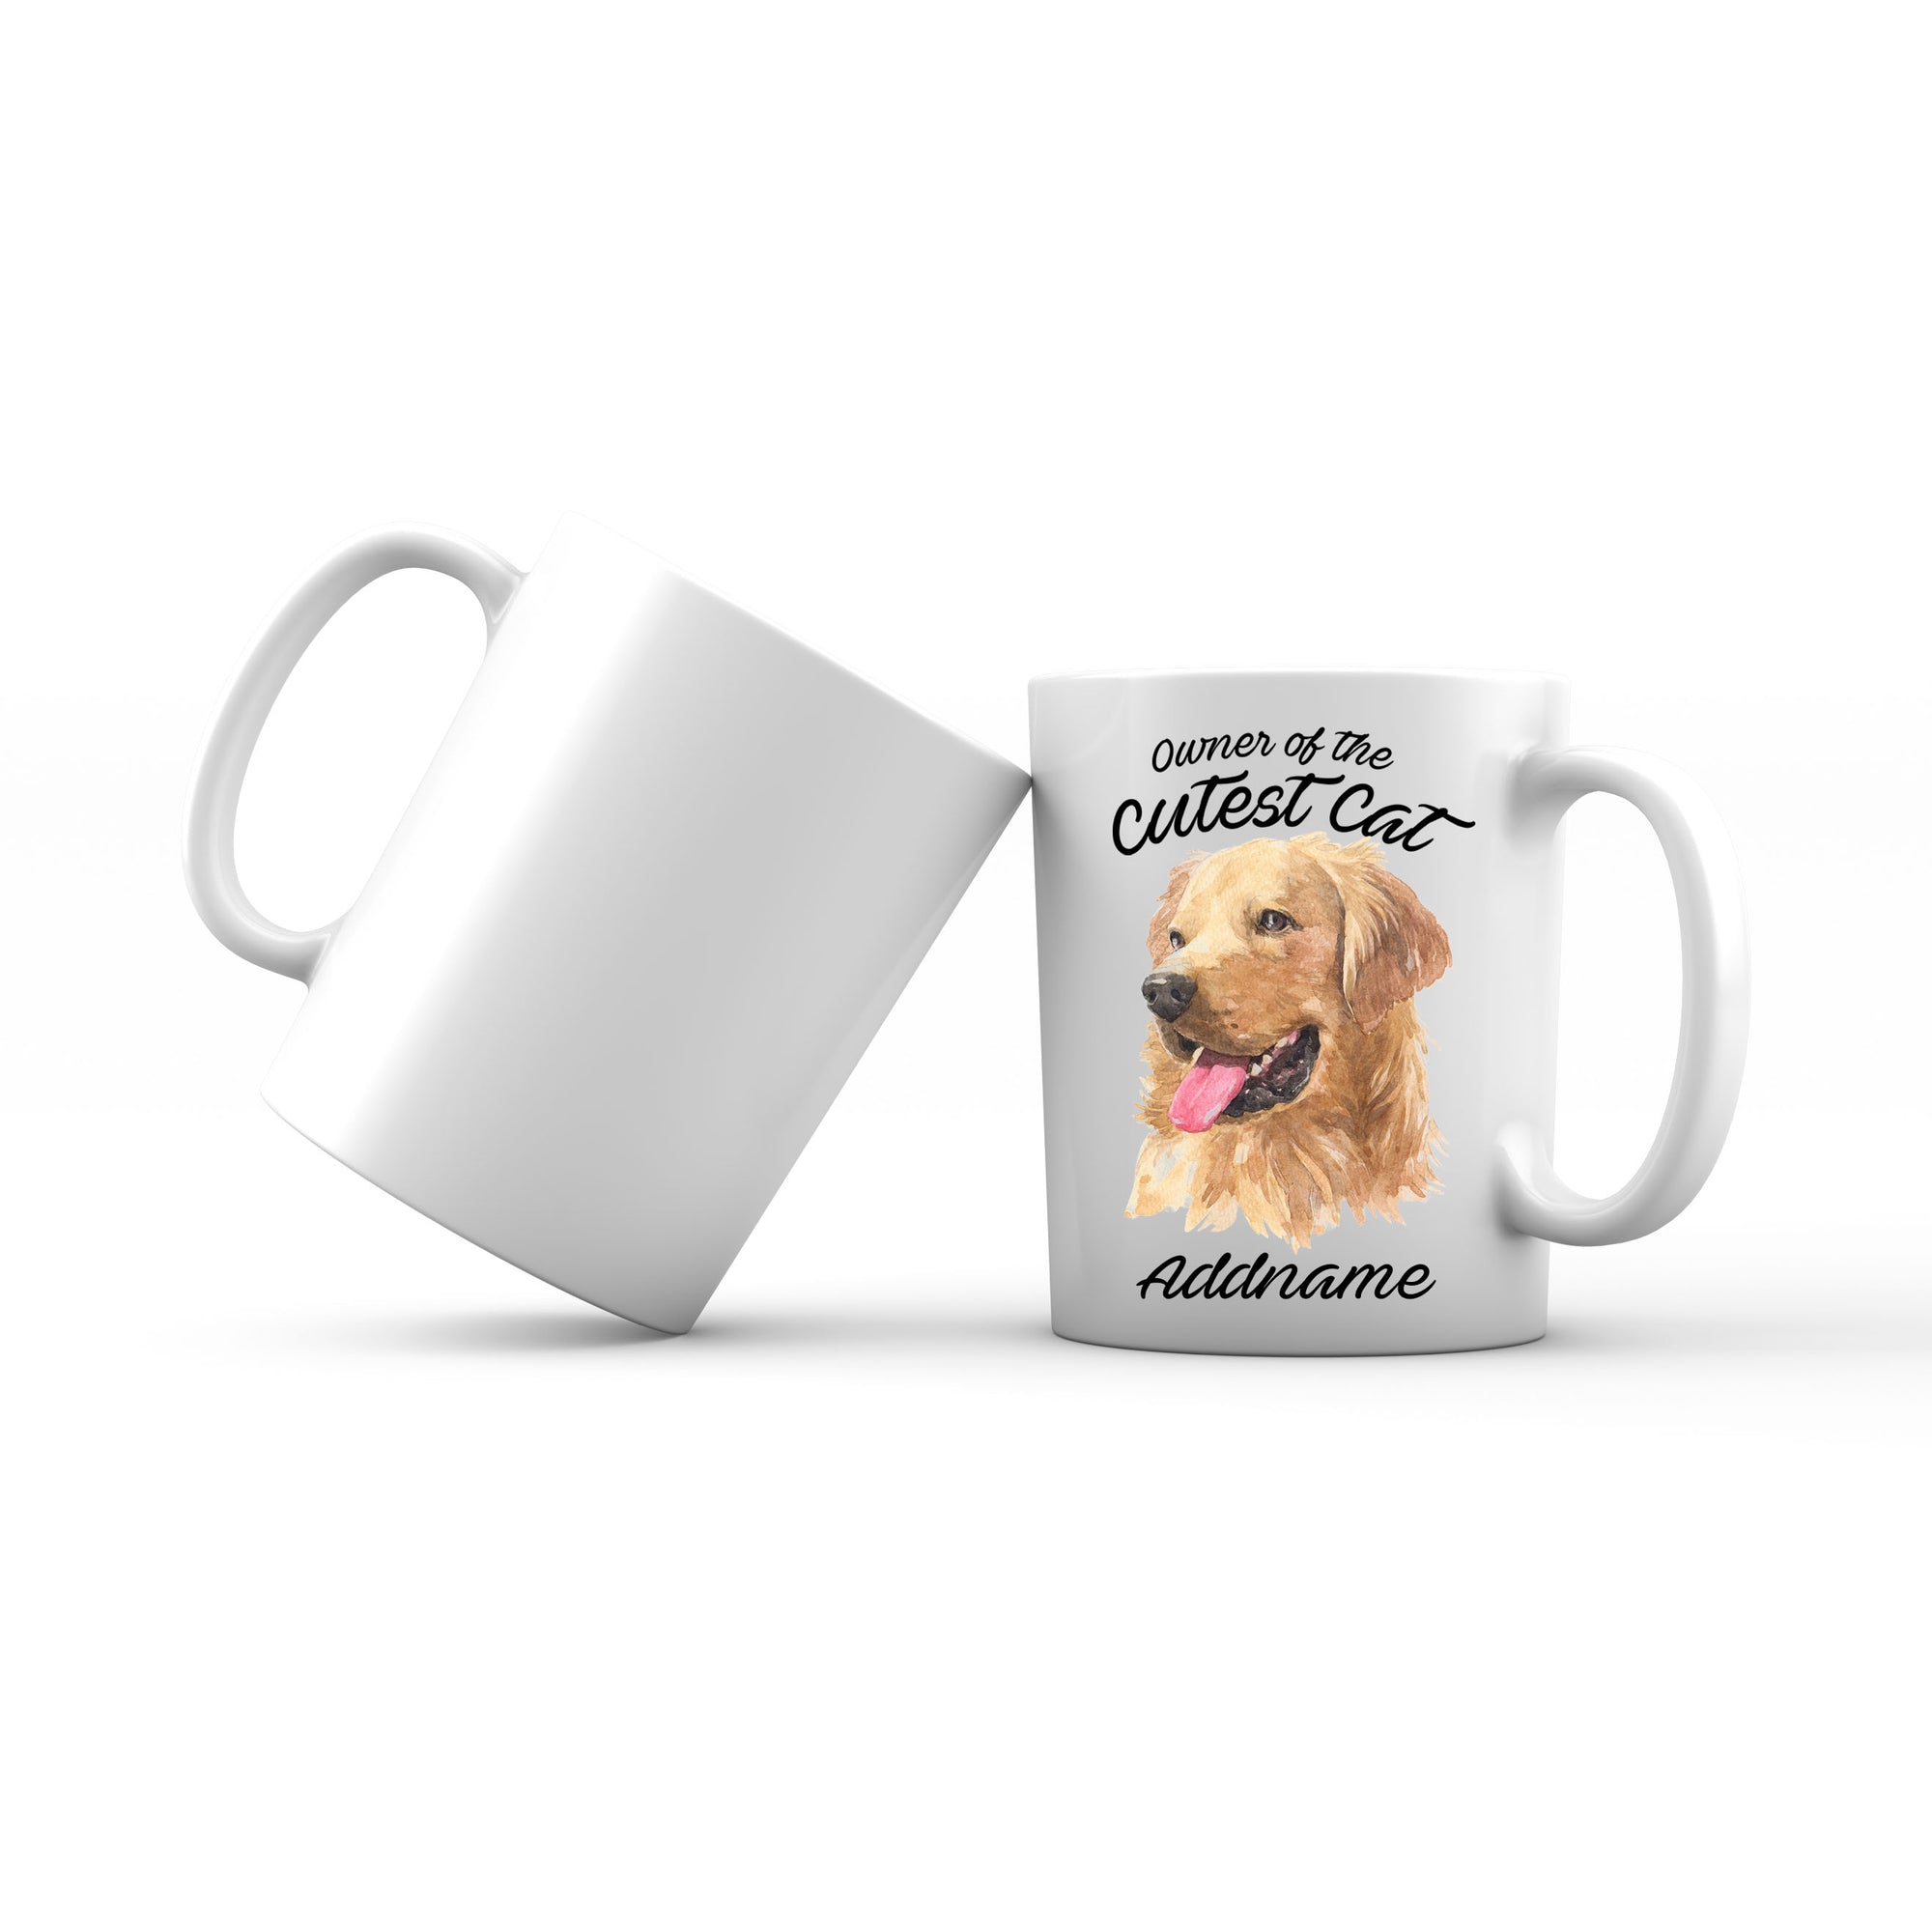 Watercolor Dog Owner Of The Cutest Dog Golden Retriever Left Addname Mug